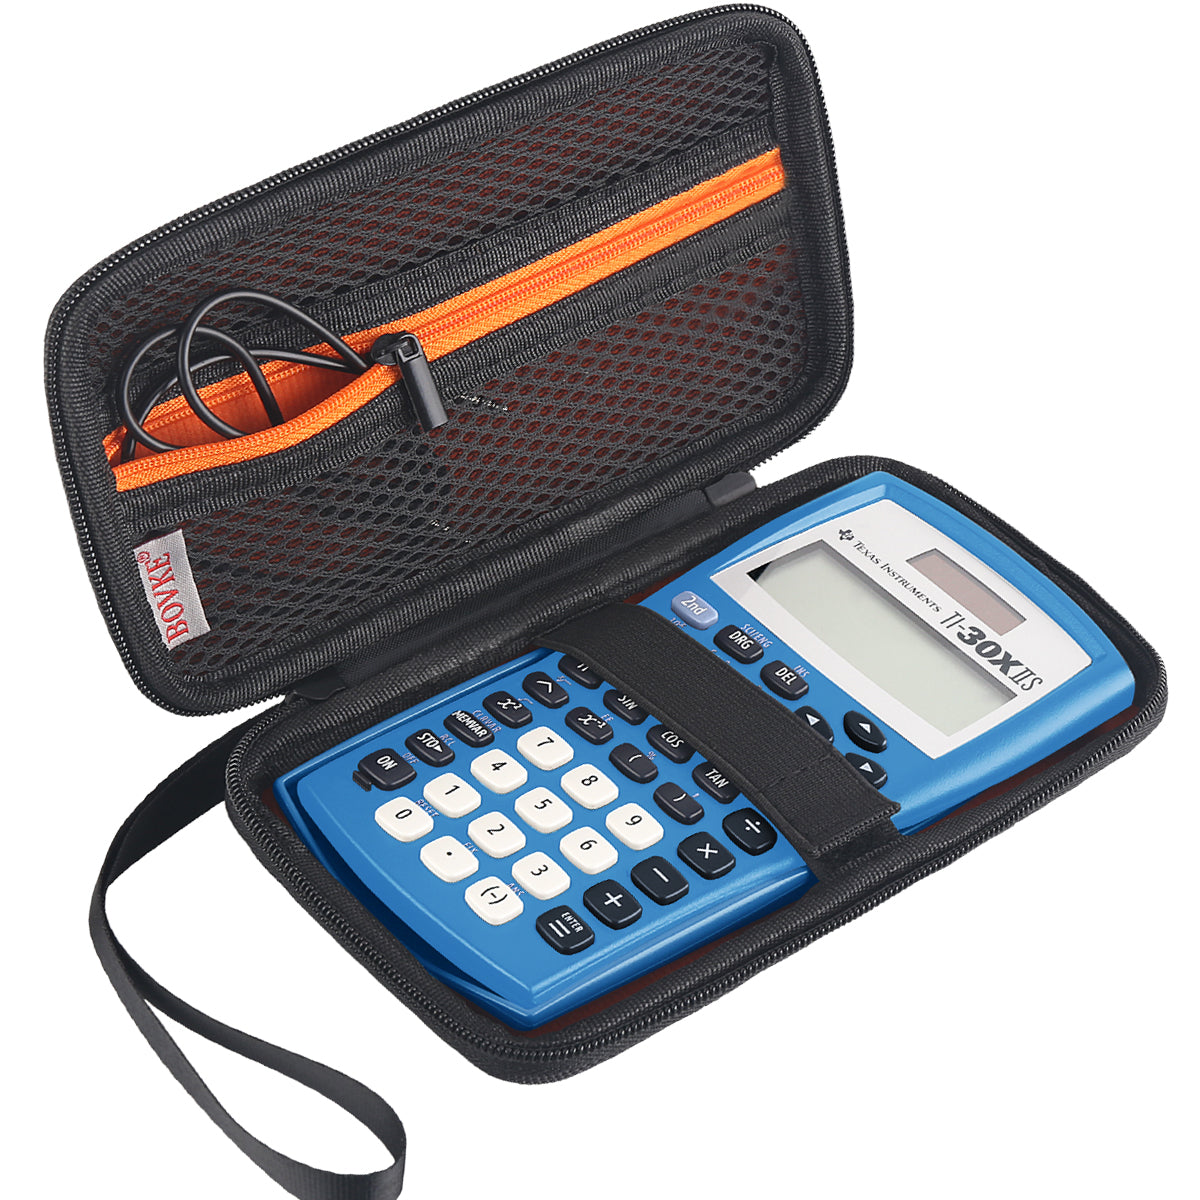 Calculator Case for Texas Instruments TI-30X IIS